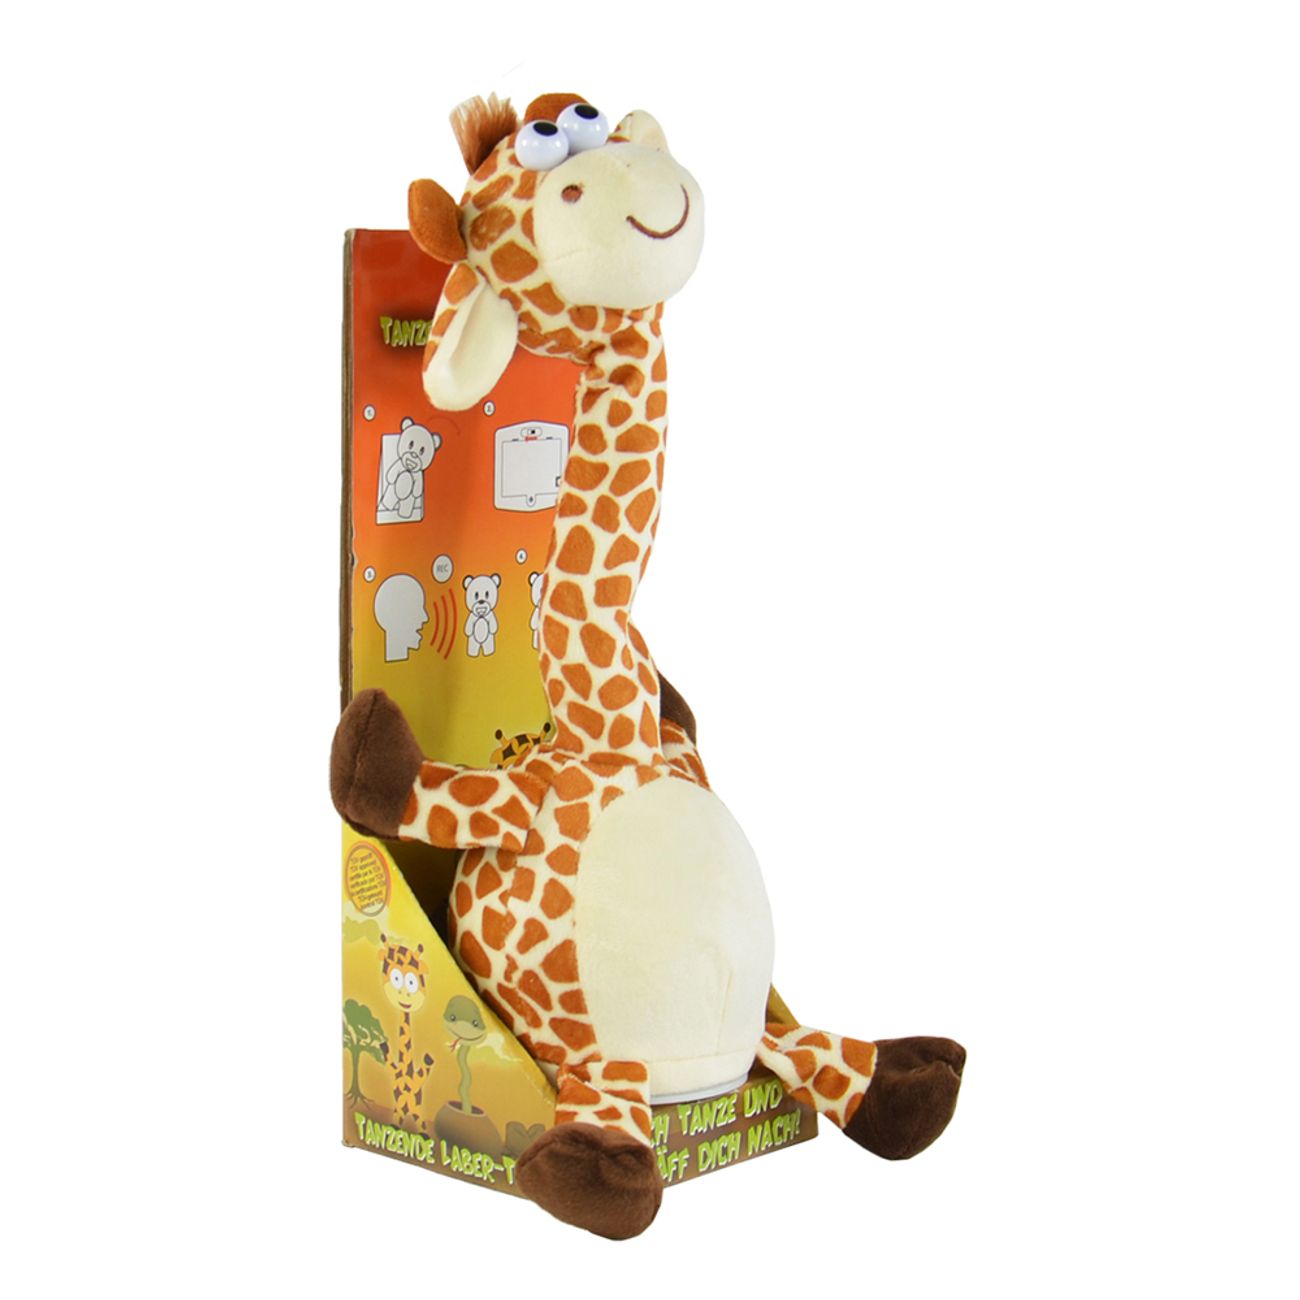 harmdjur-dansande-giraff-73336-1